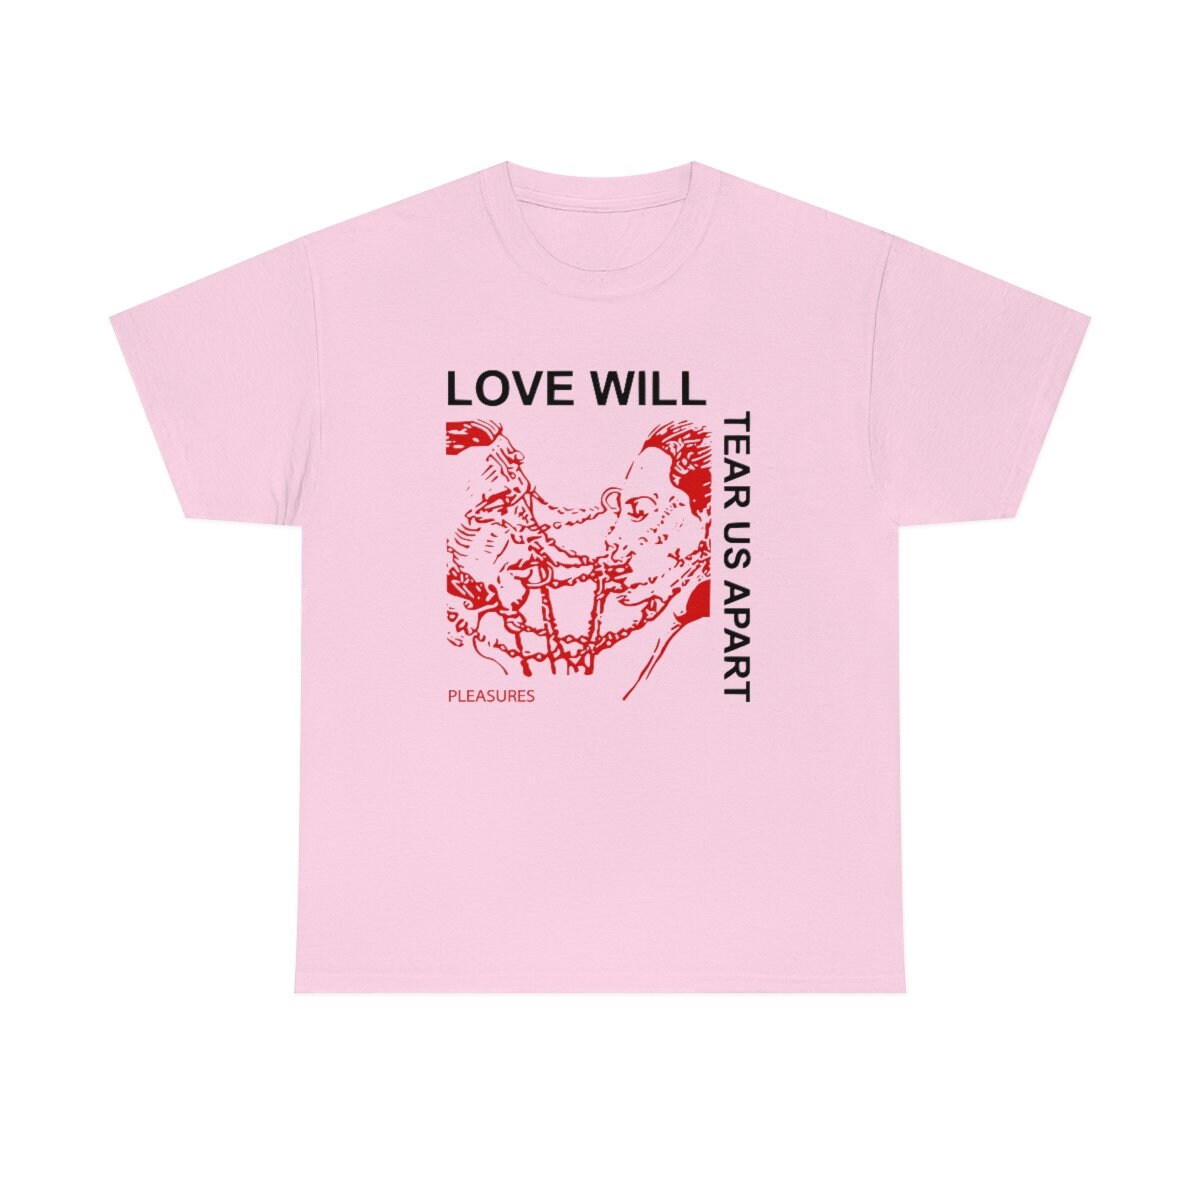 Discover Lil Peep Shirt, Love Will Tear Us Apart Shirt